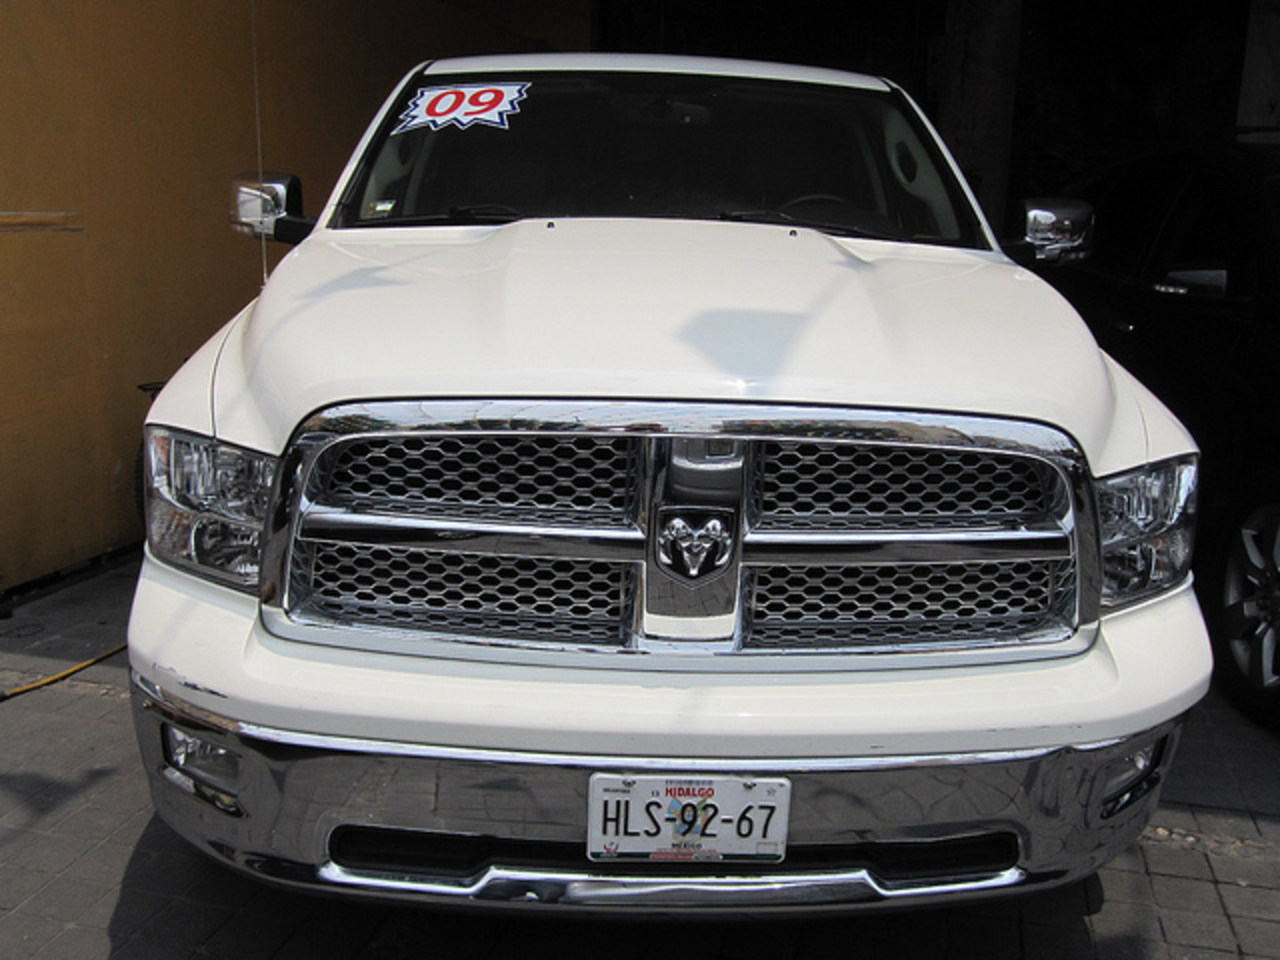 2009 Dodge Ram 2500, Quad Cab 4x4 Laramie | Flickr - Photo Sharing!